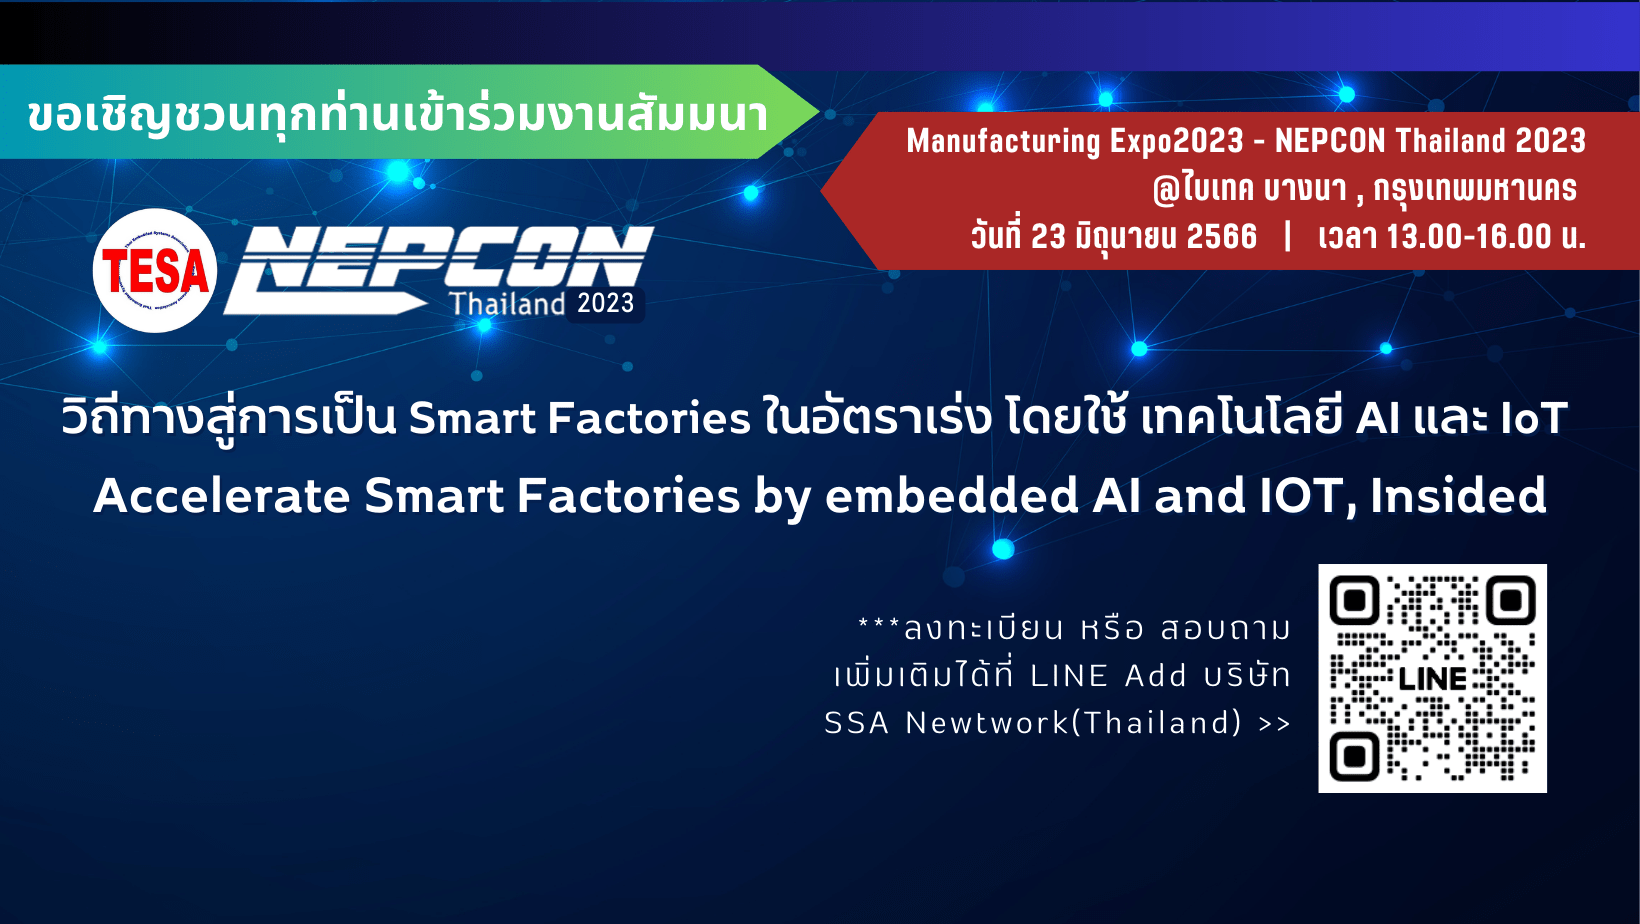 SSA Network(Thailand) ขอเชิญชวนเข้าร่วมงาน TESA Seminar NEPCON2023